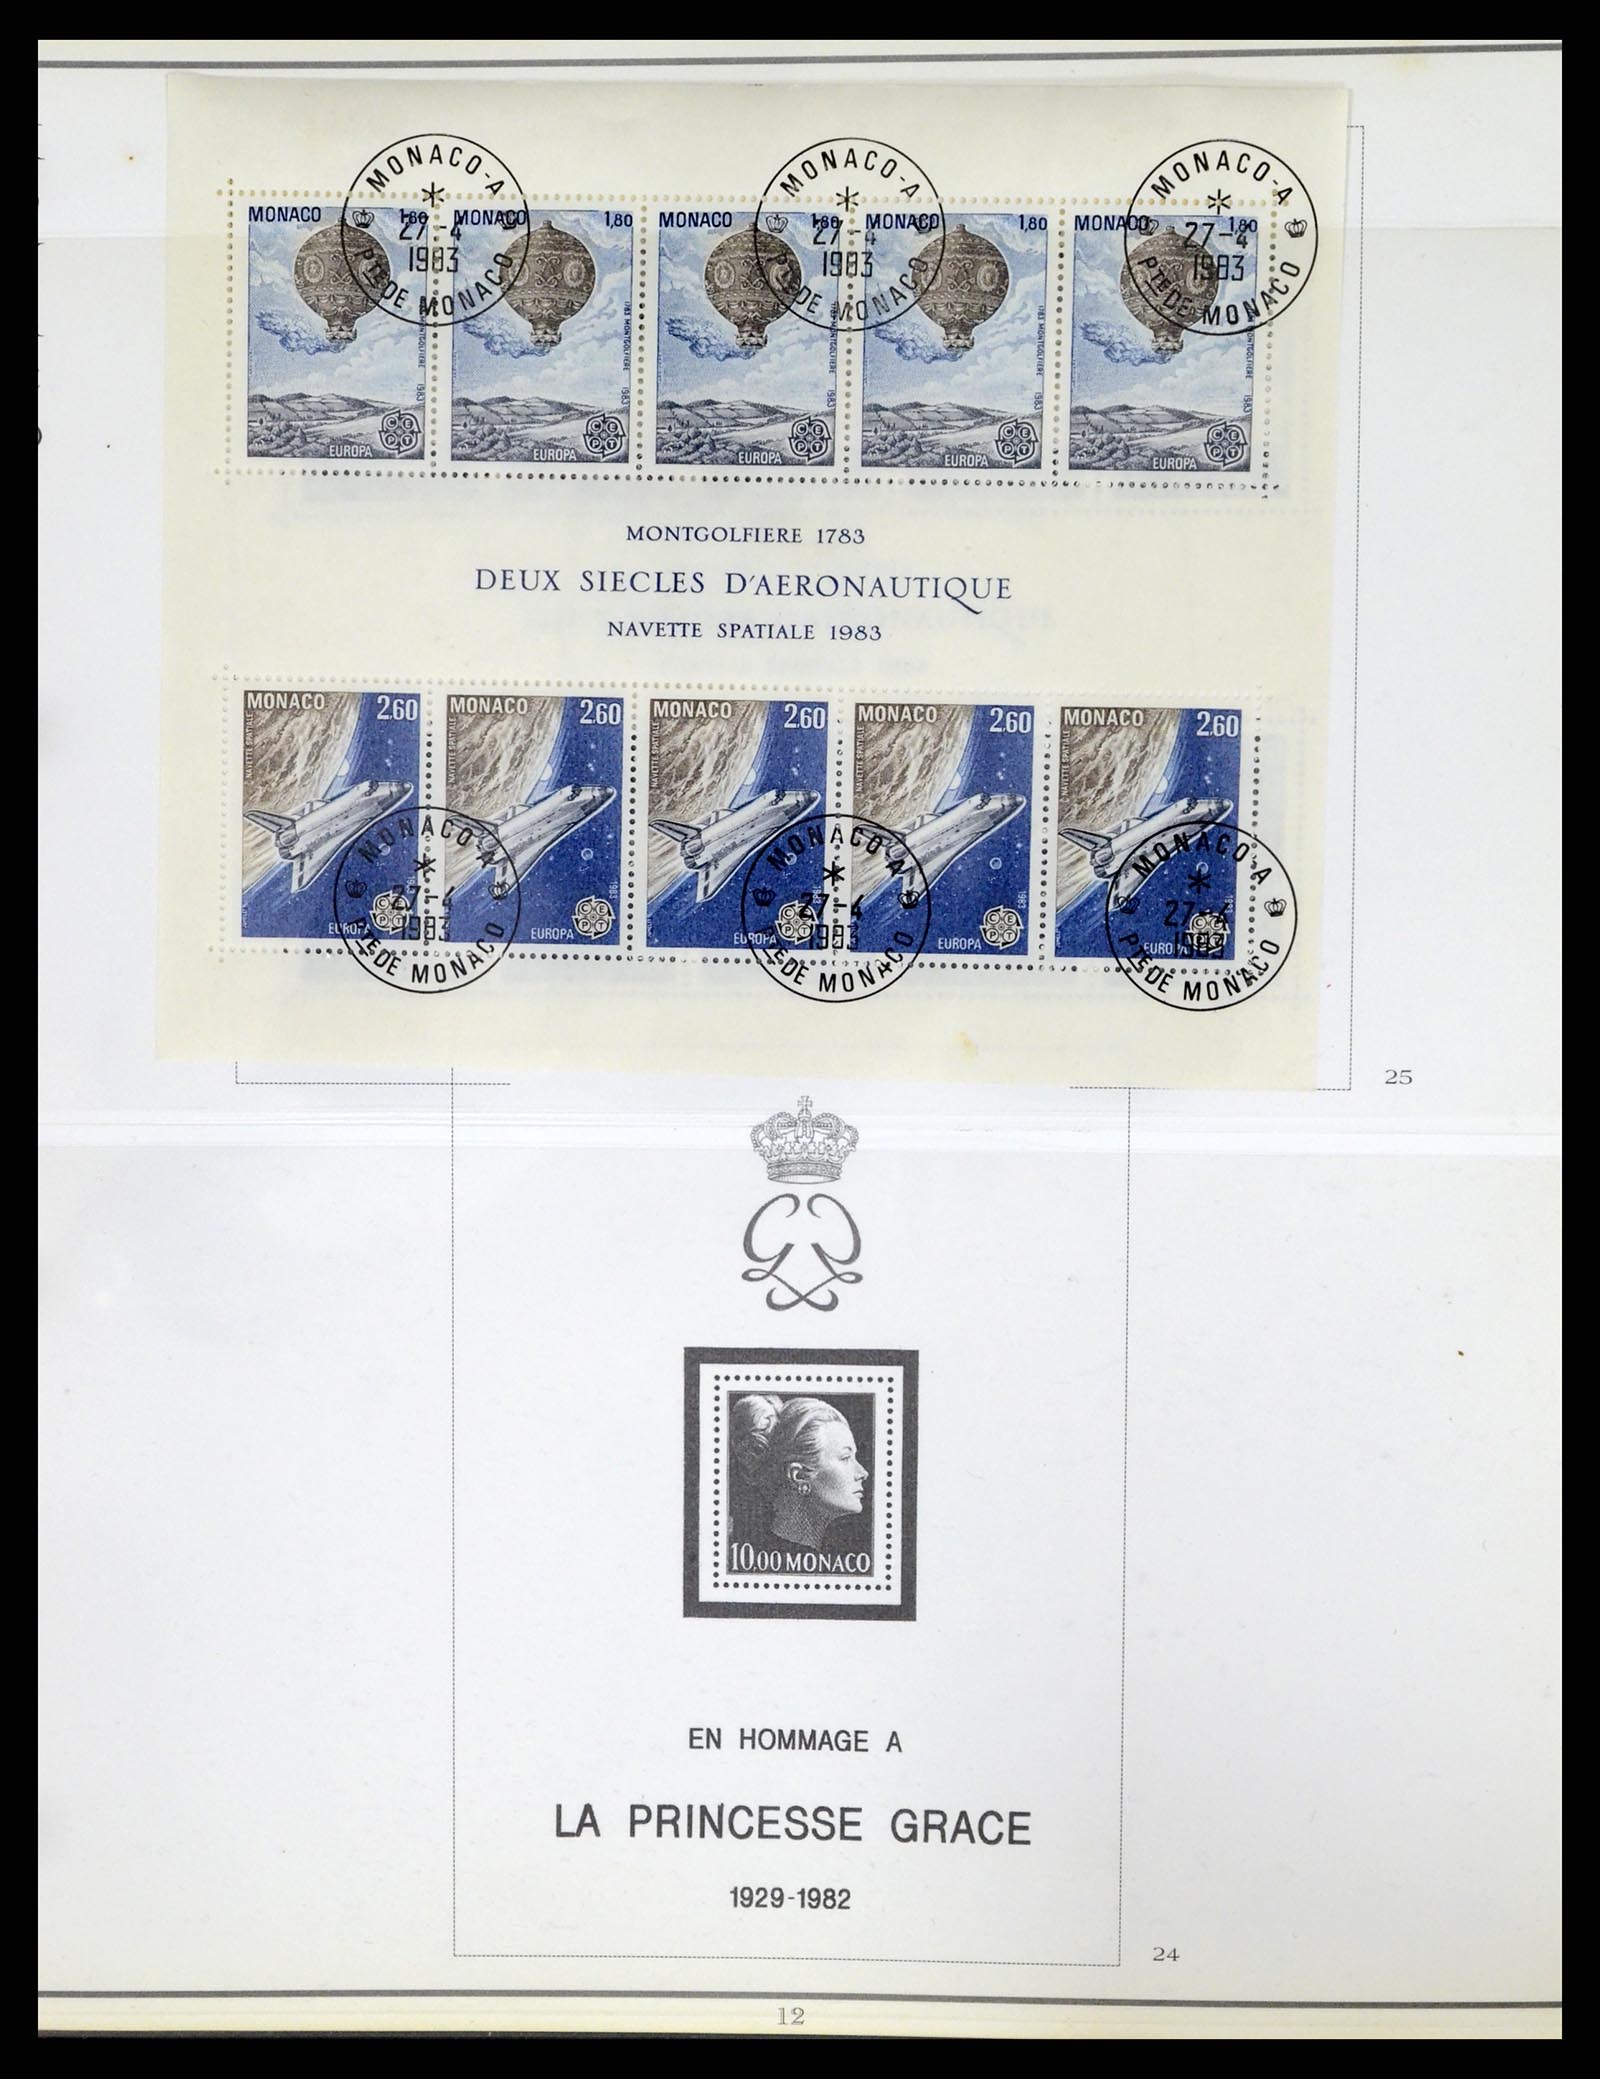 37437 184 - Stamp collection 37437 Monaco 1885-1996.